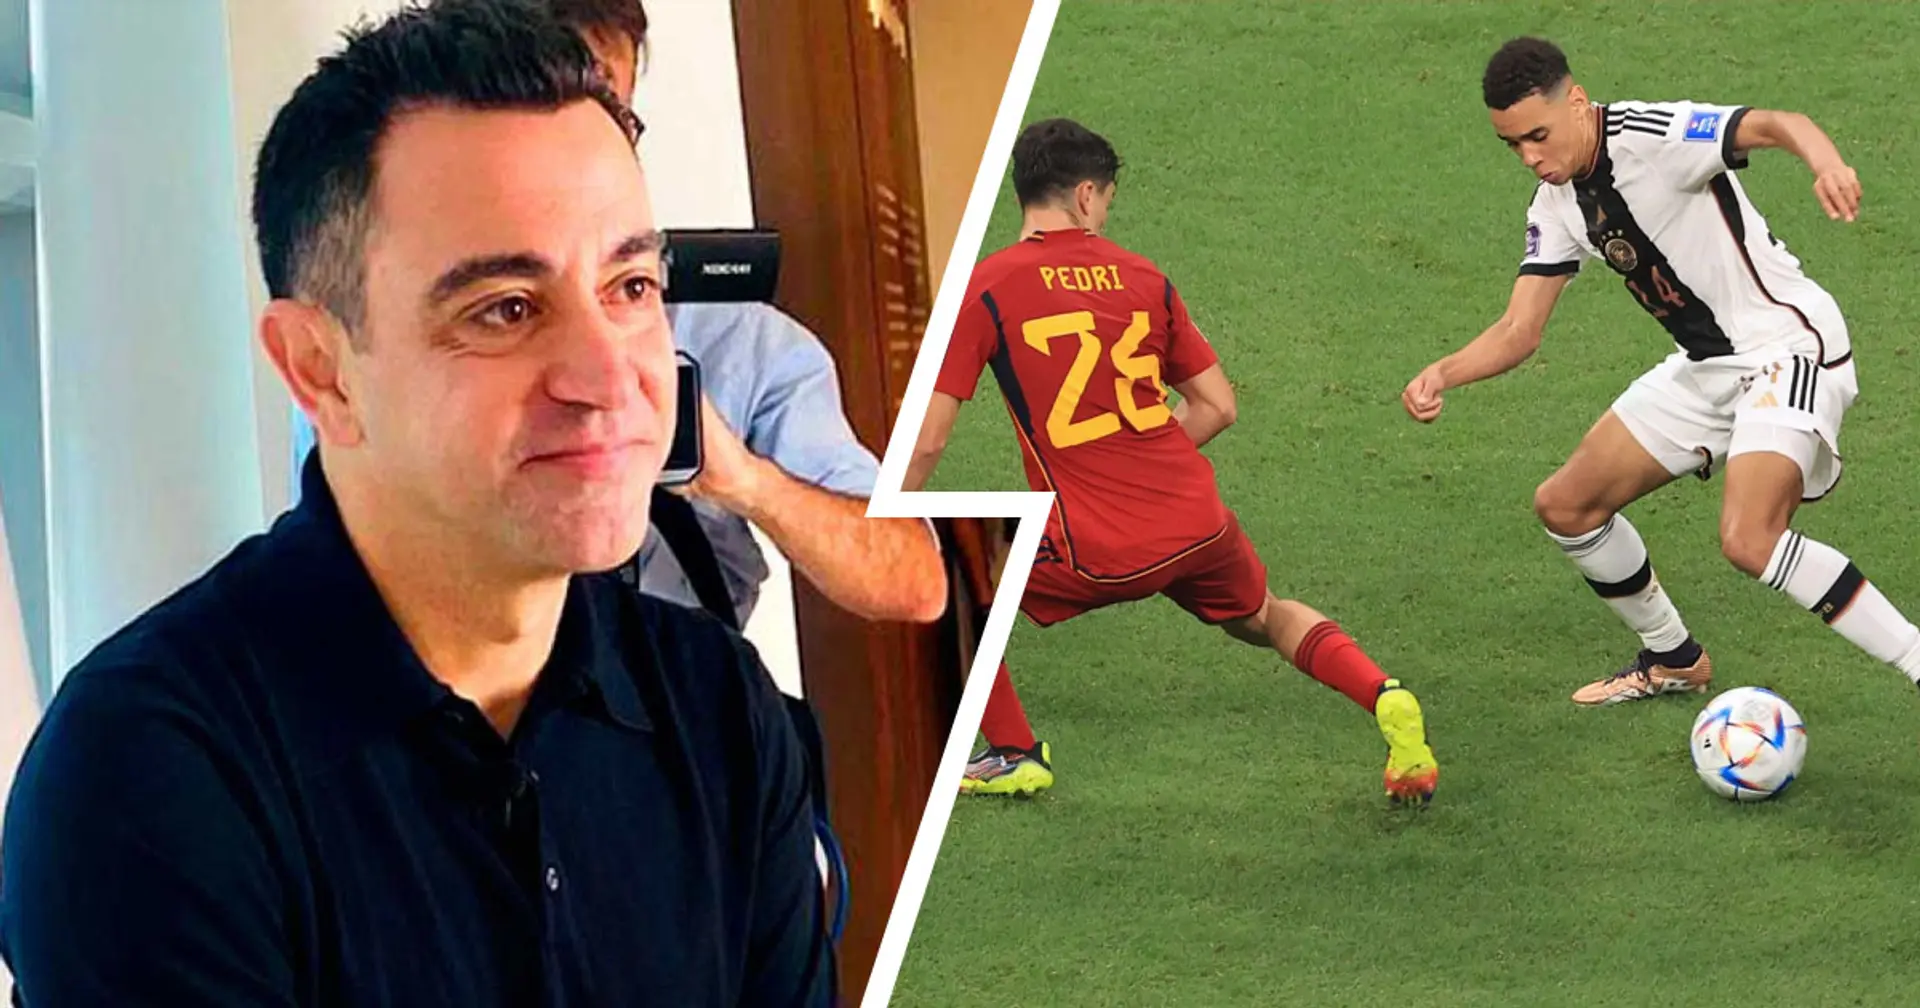 Xavi reveals his six best players at Qatar World Cup so far - names 2 Barca stars